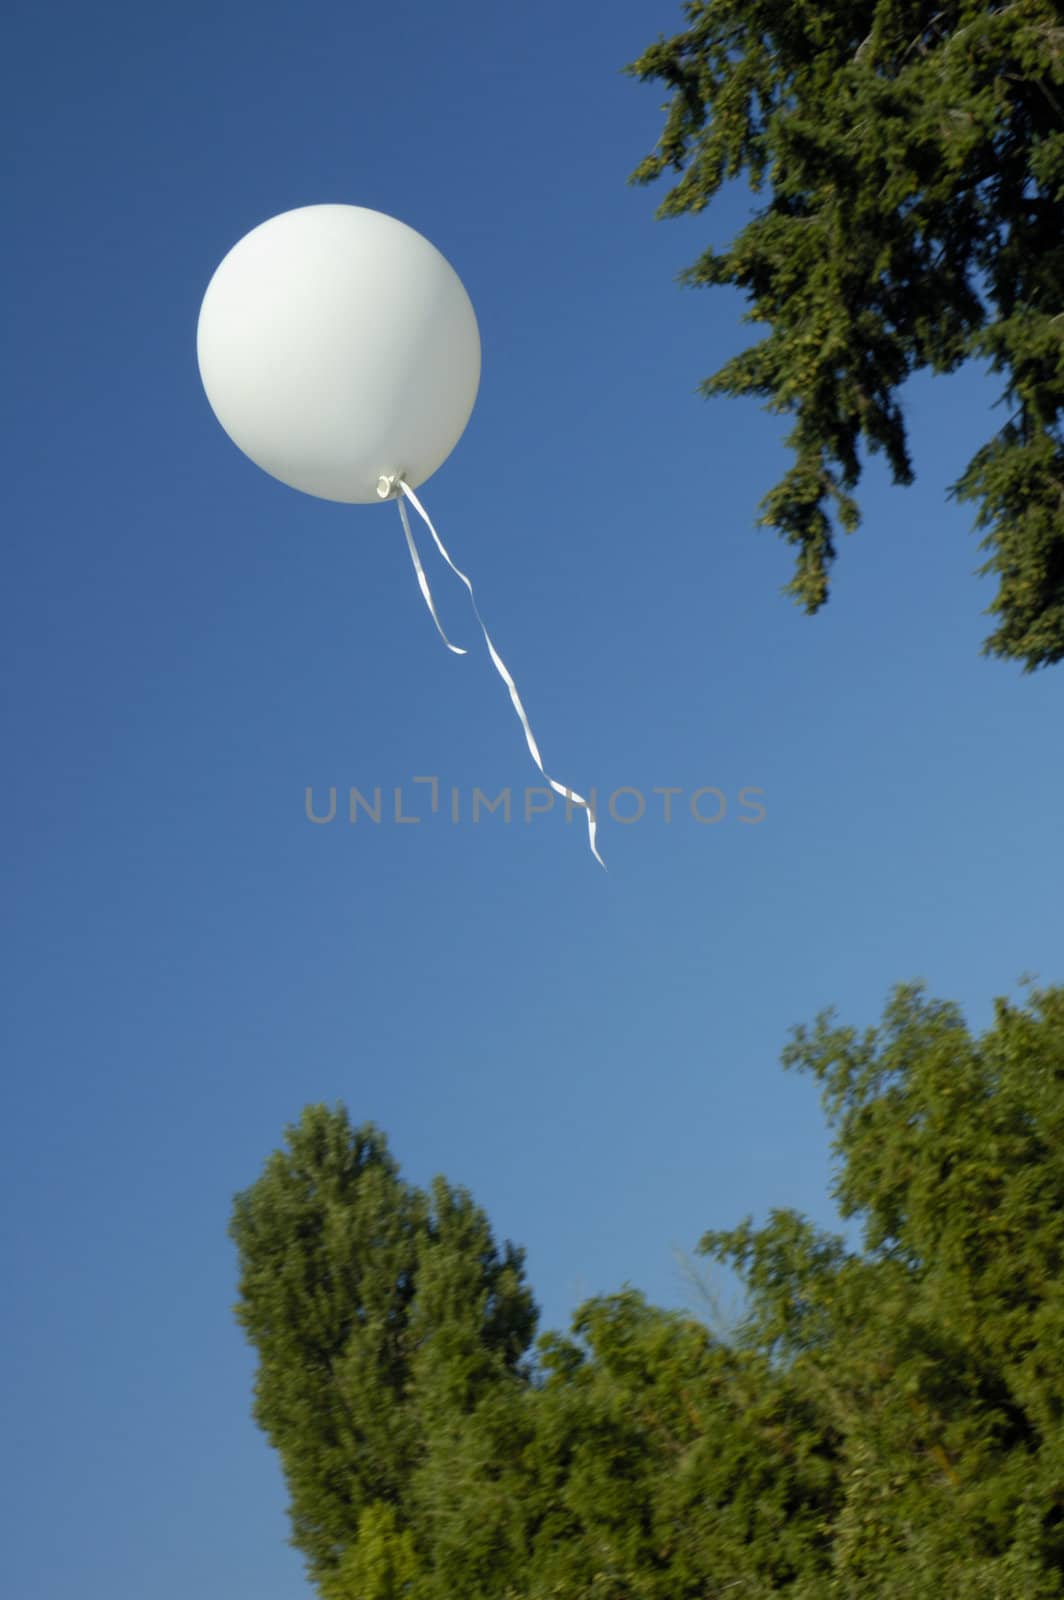 Escaped balloon by Bateleur